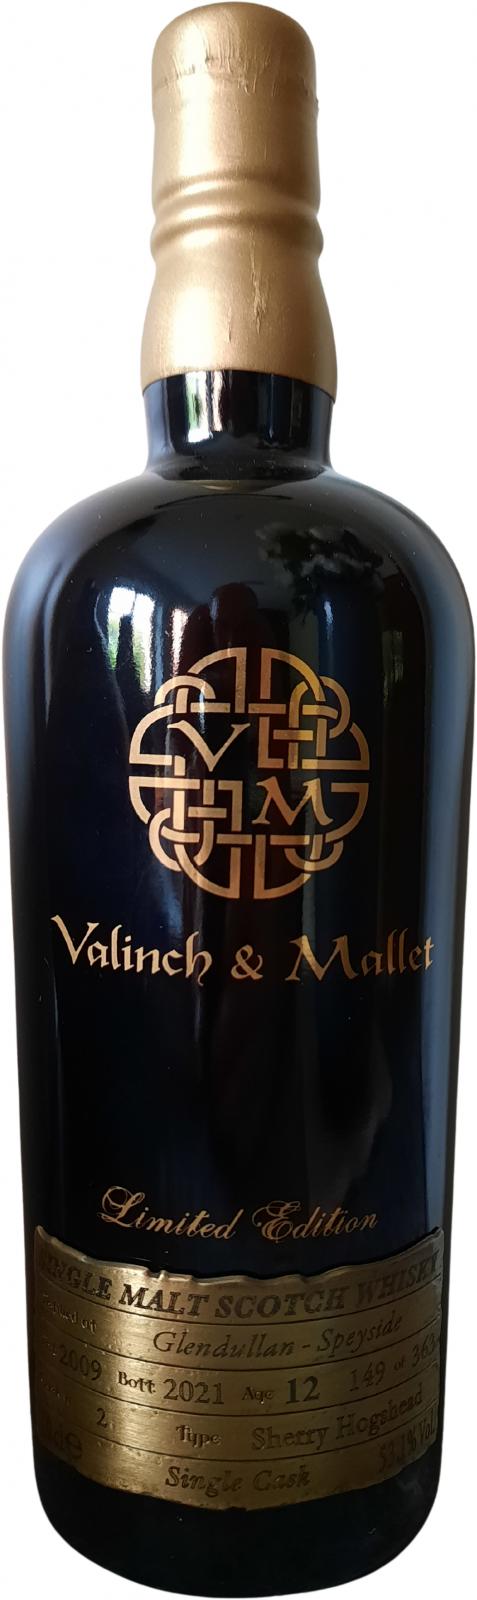 Glendullan 2009 V&M The spirit of art 12 Year Old 2021 Release (Cask #2) Single Malt Scotch Whisky | 700ML